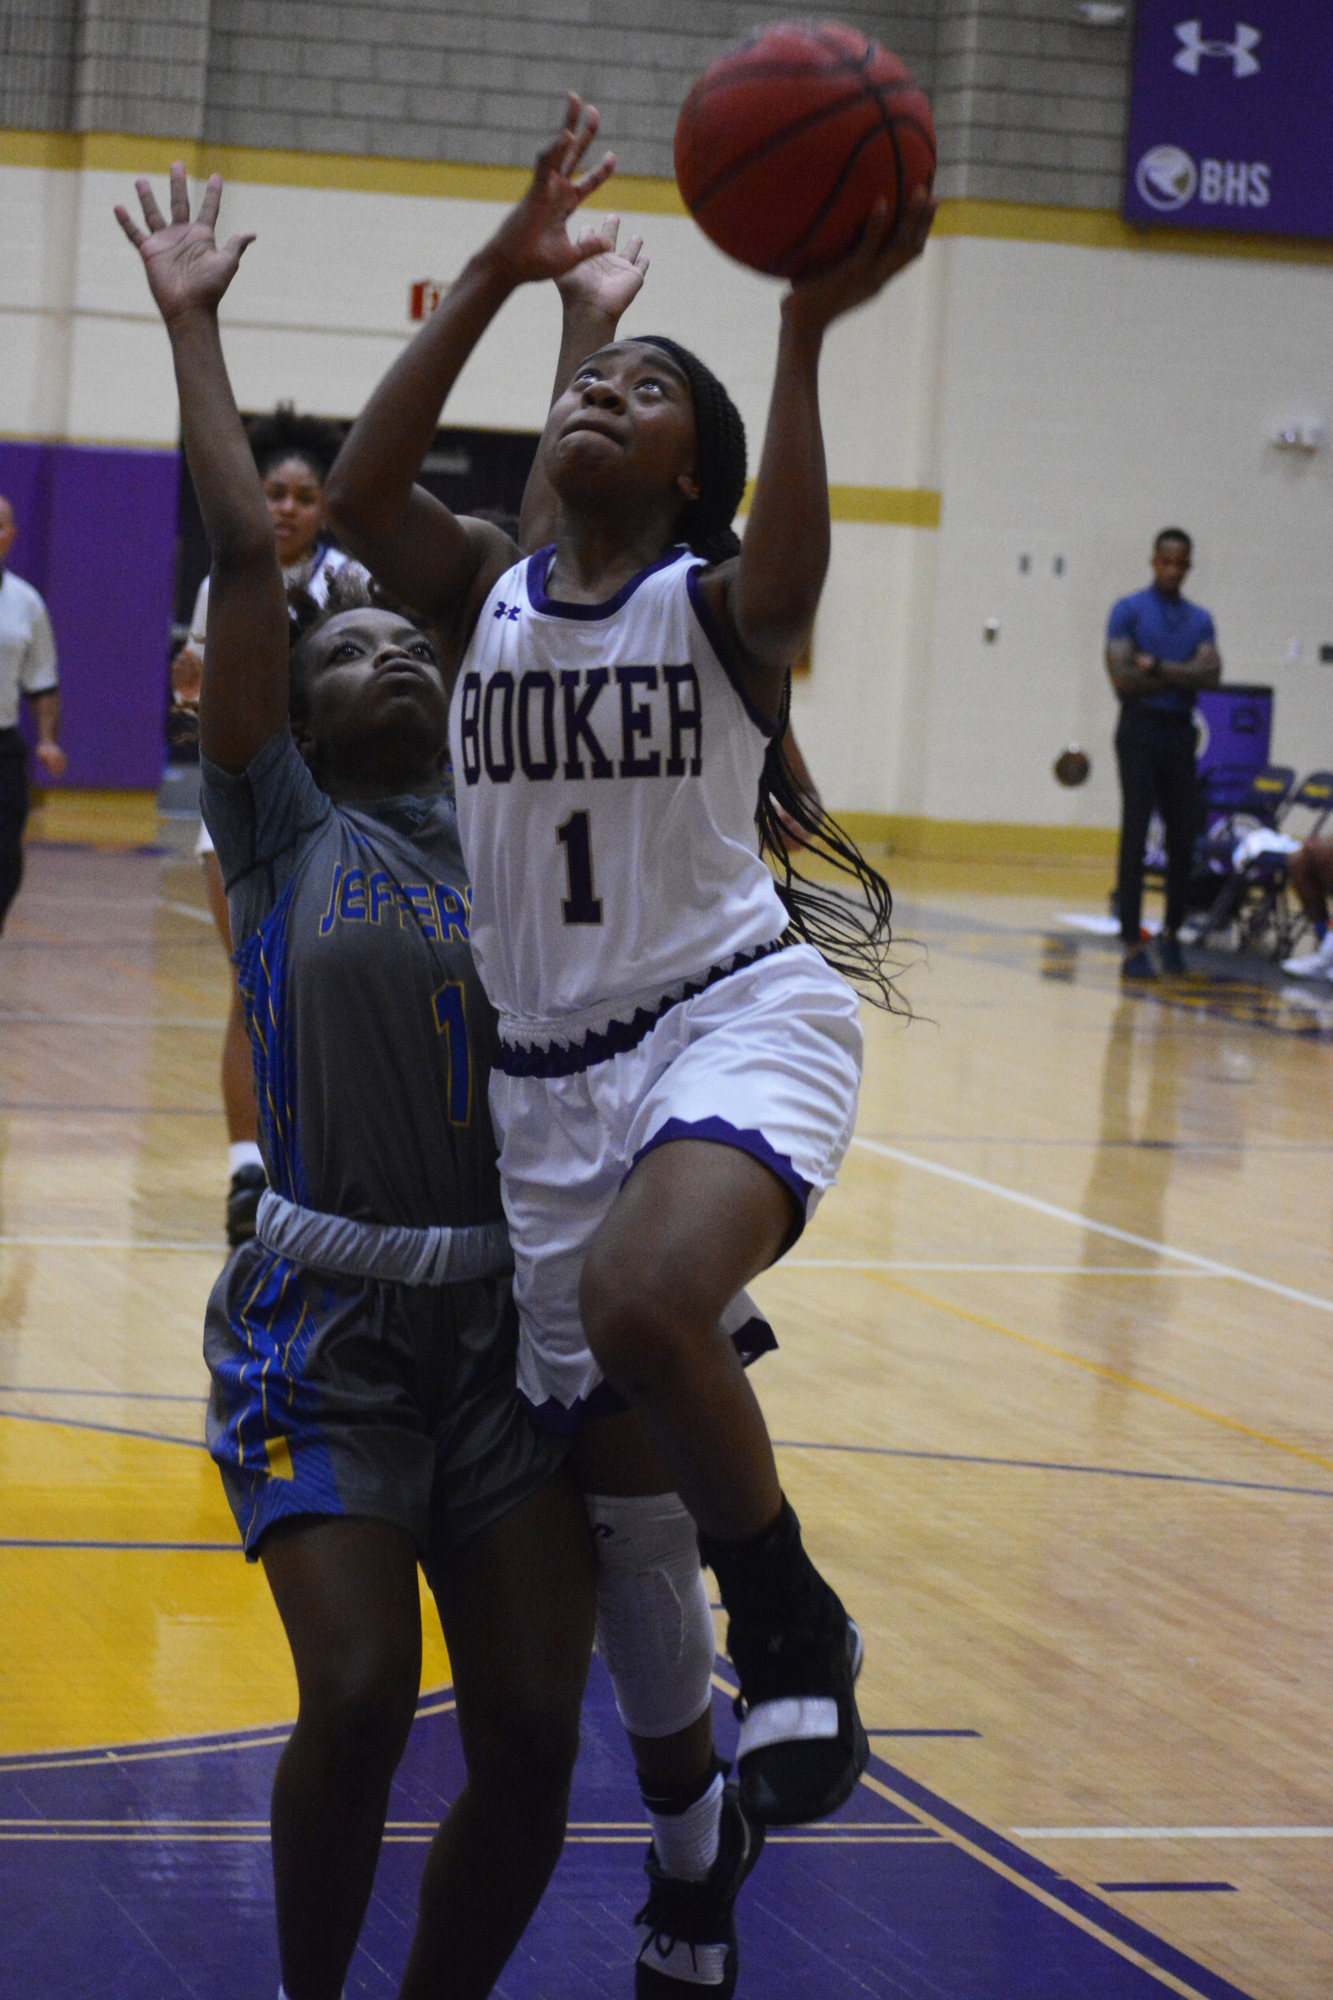 8. Junior Booker guard Jaela Dennis drives to the basket against Jefferson High.